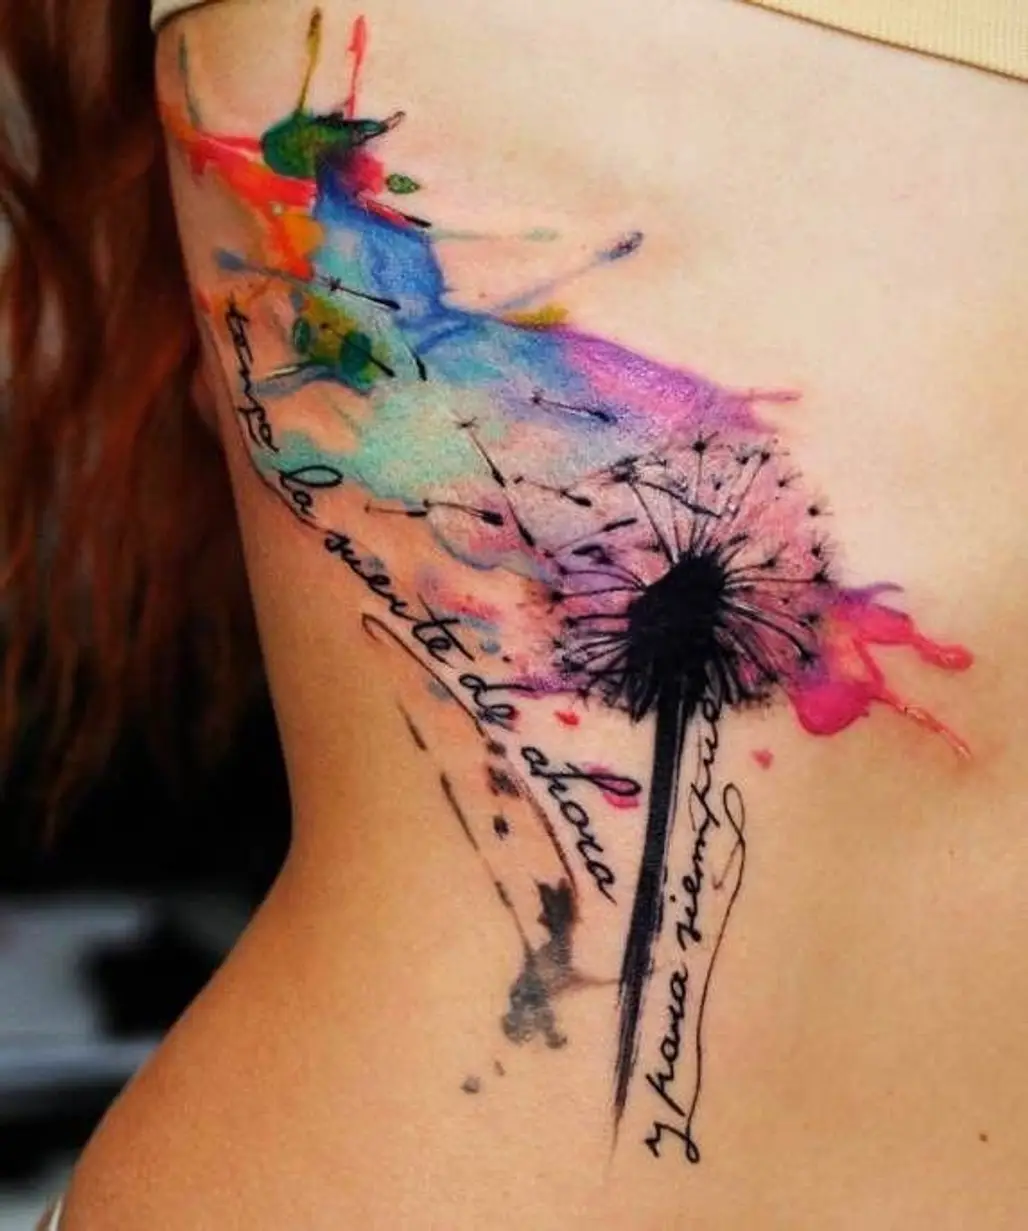 tattoo,arm,flower,pattern,hand,